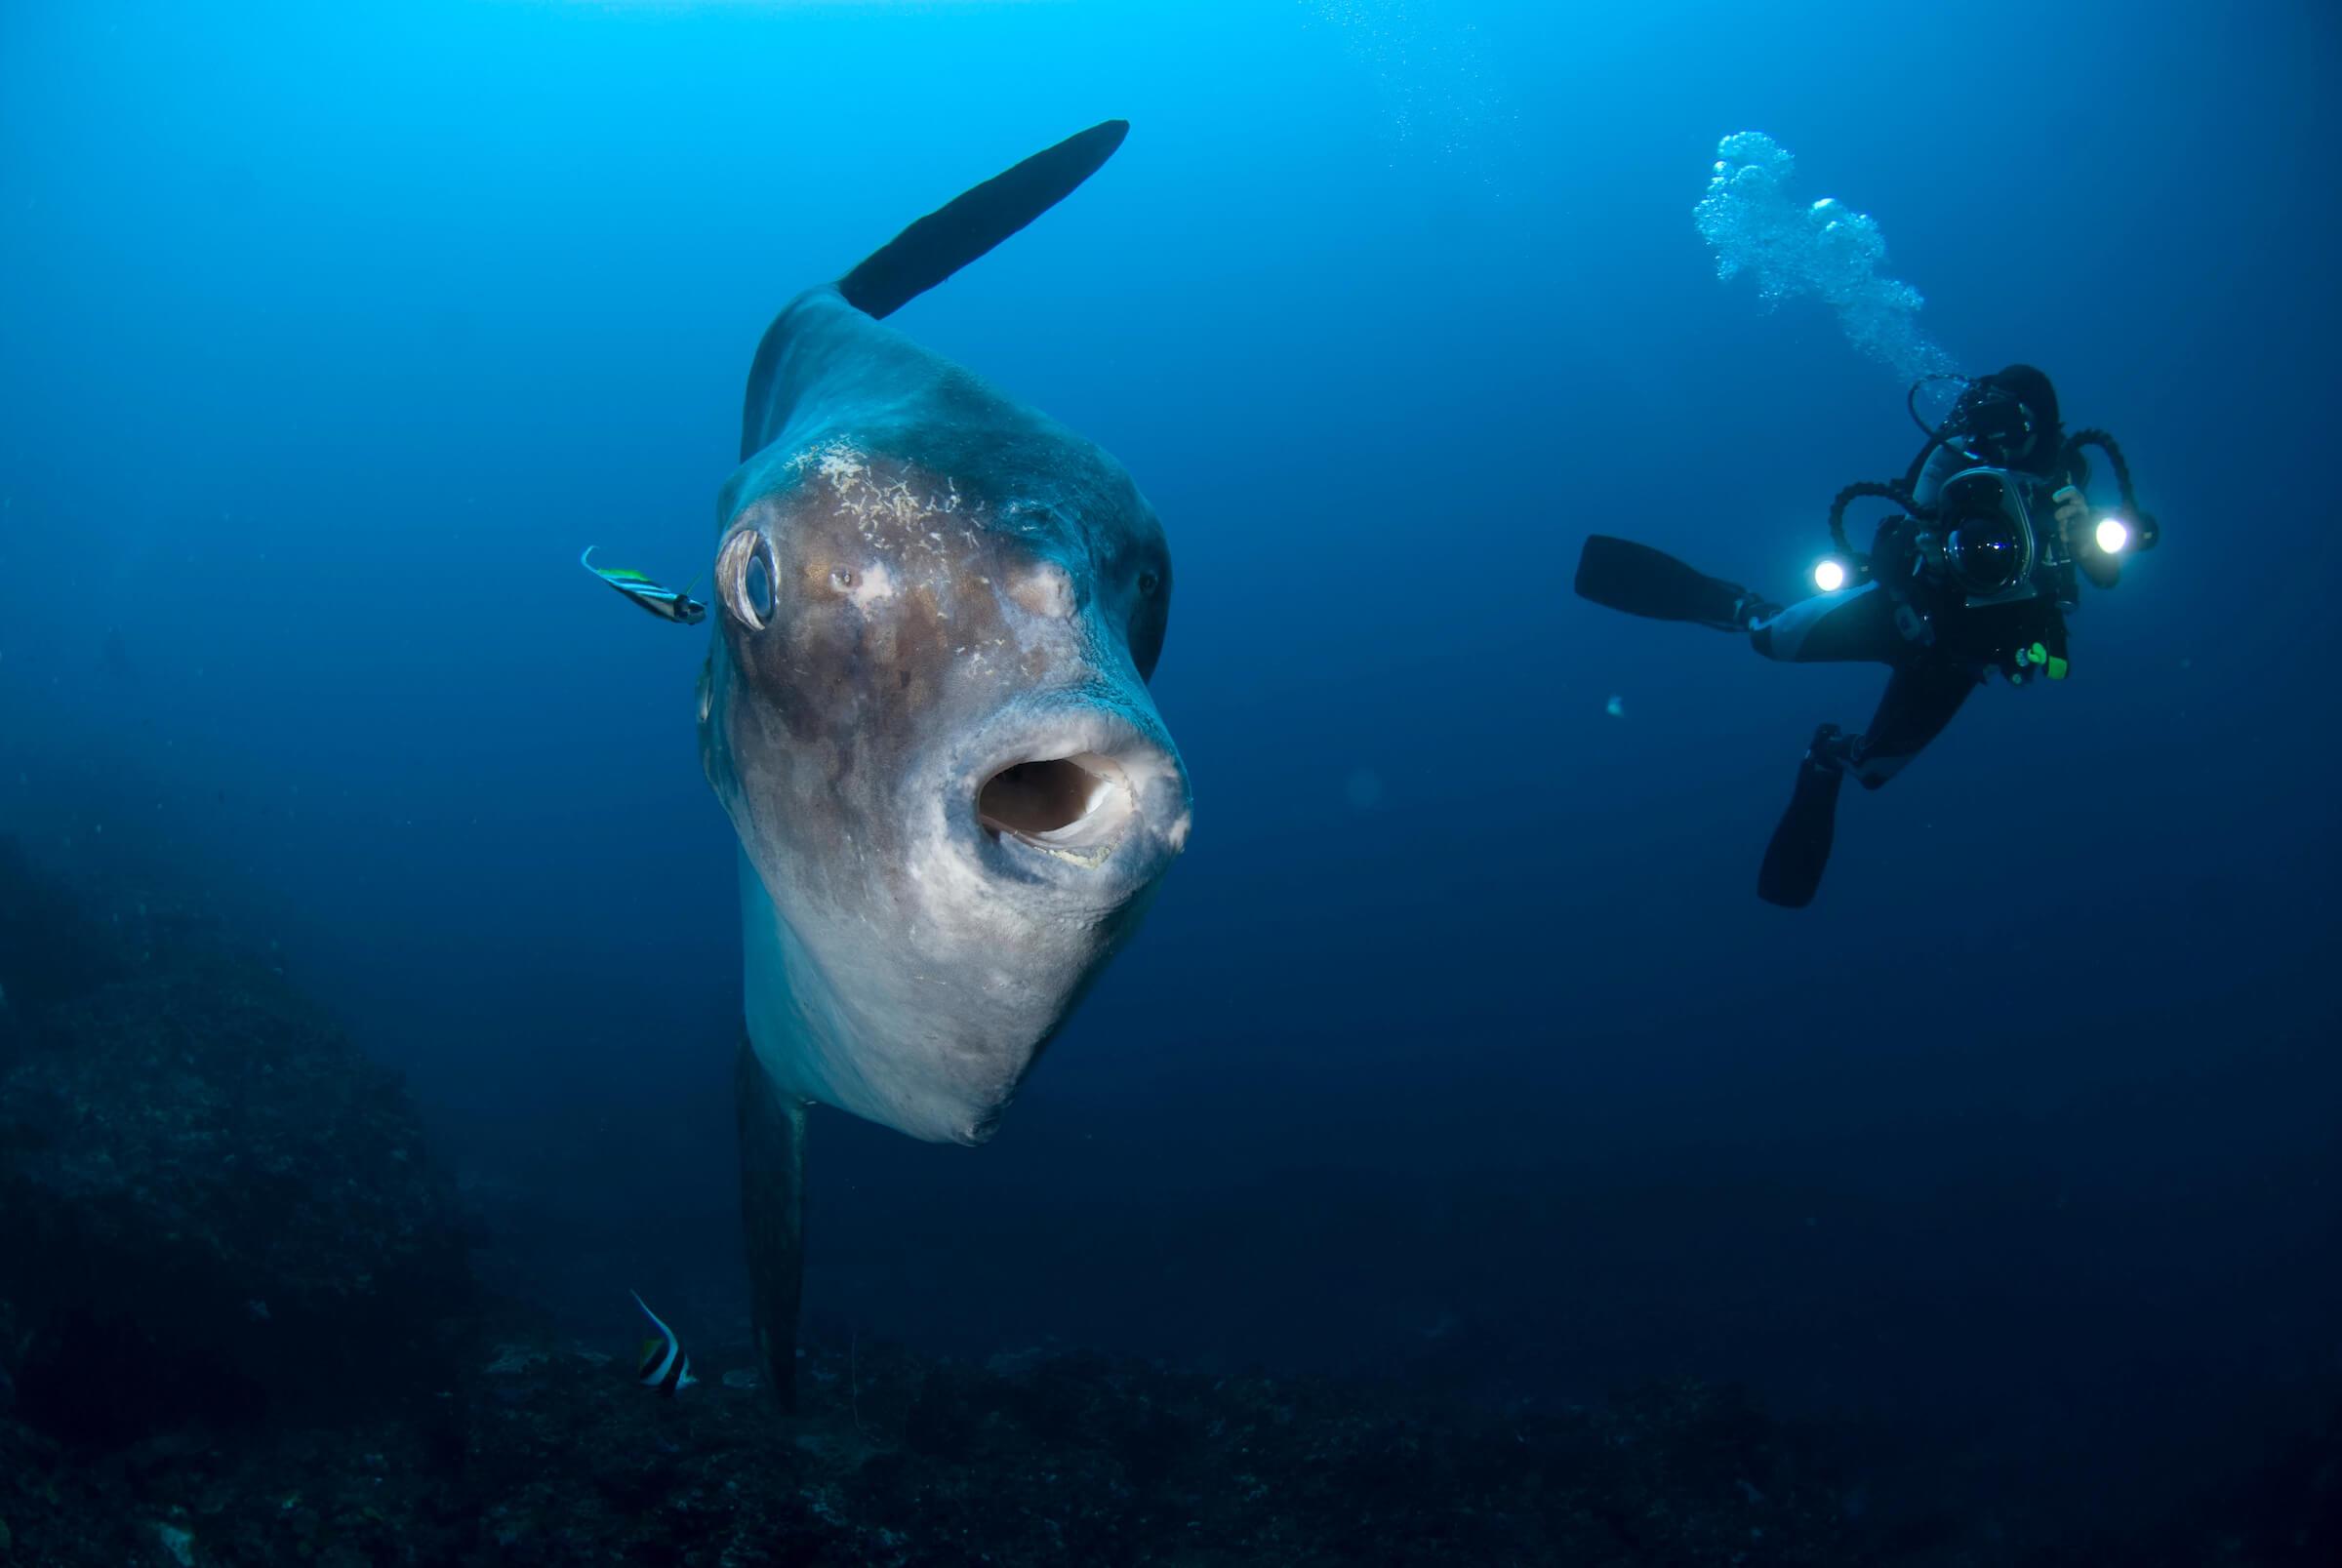 Scuba diver's guide to ocean sunfish